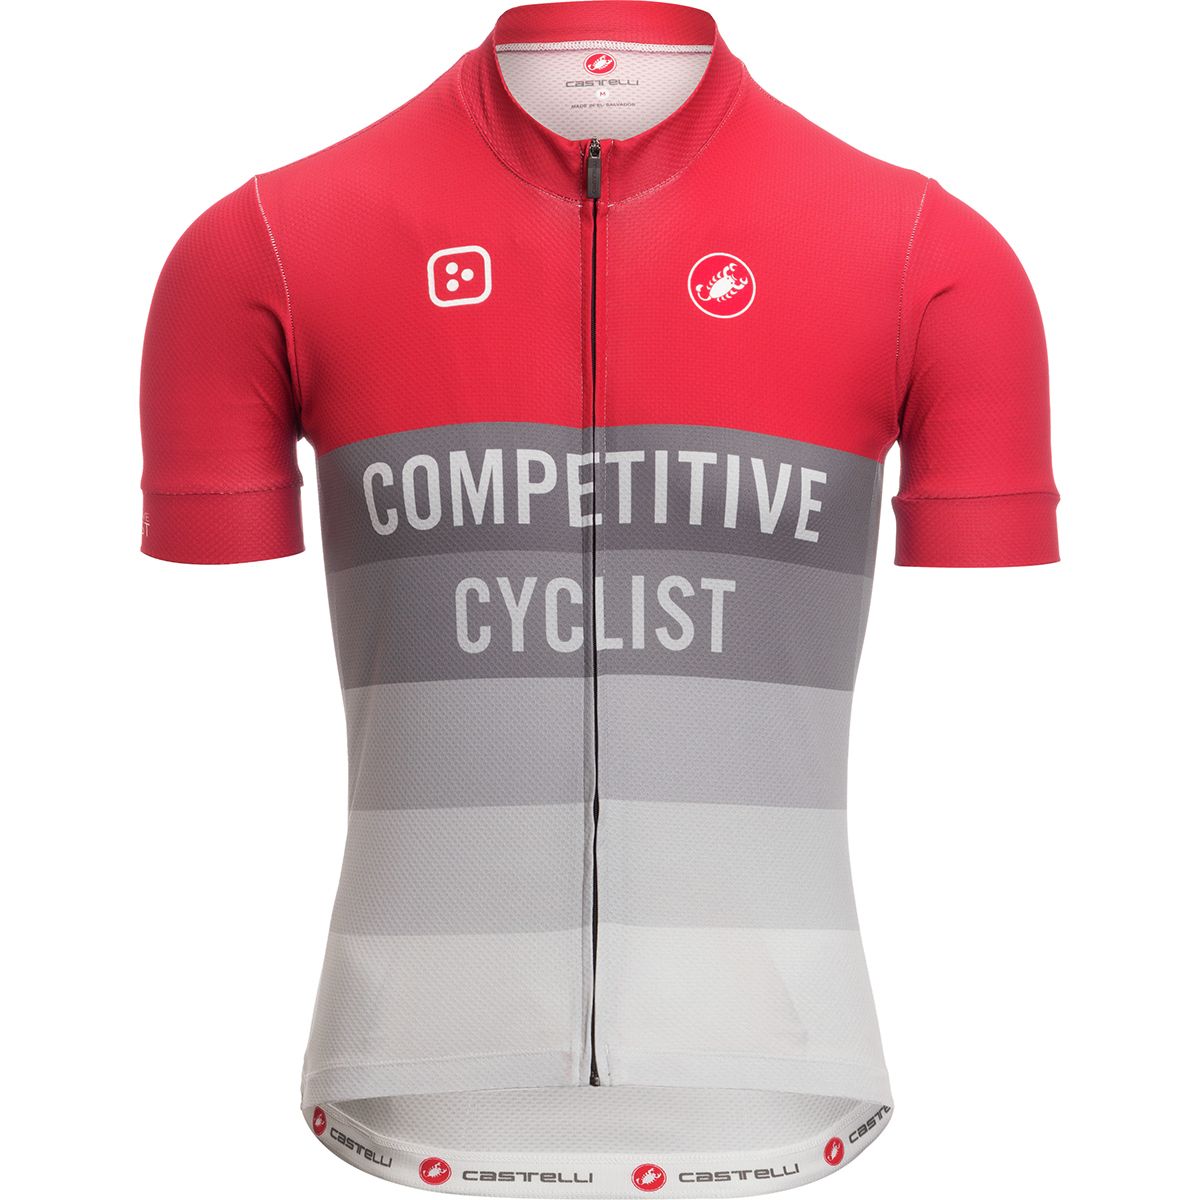 Castelli Competitive Cyclist Club Jersey - Men's